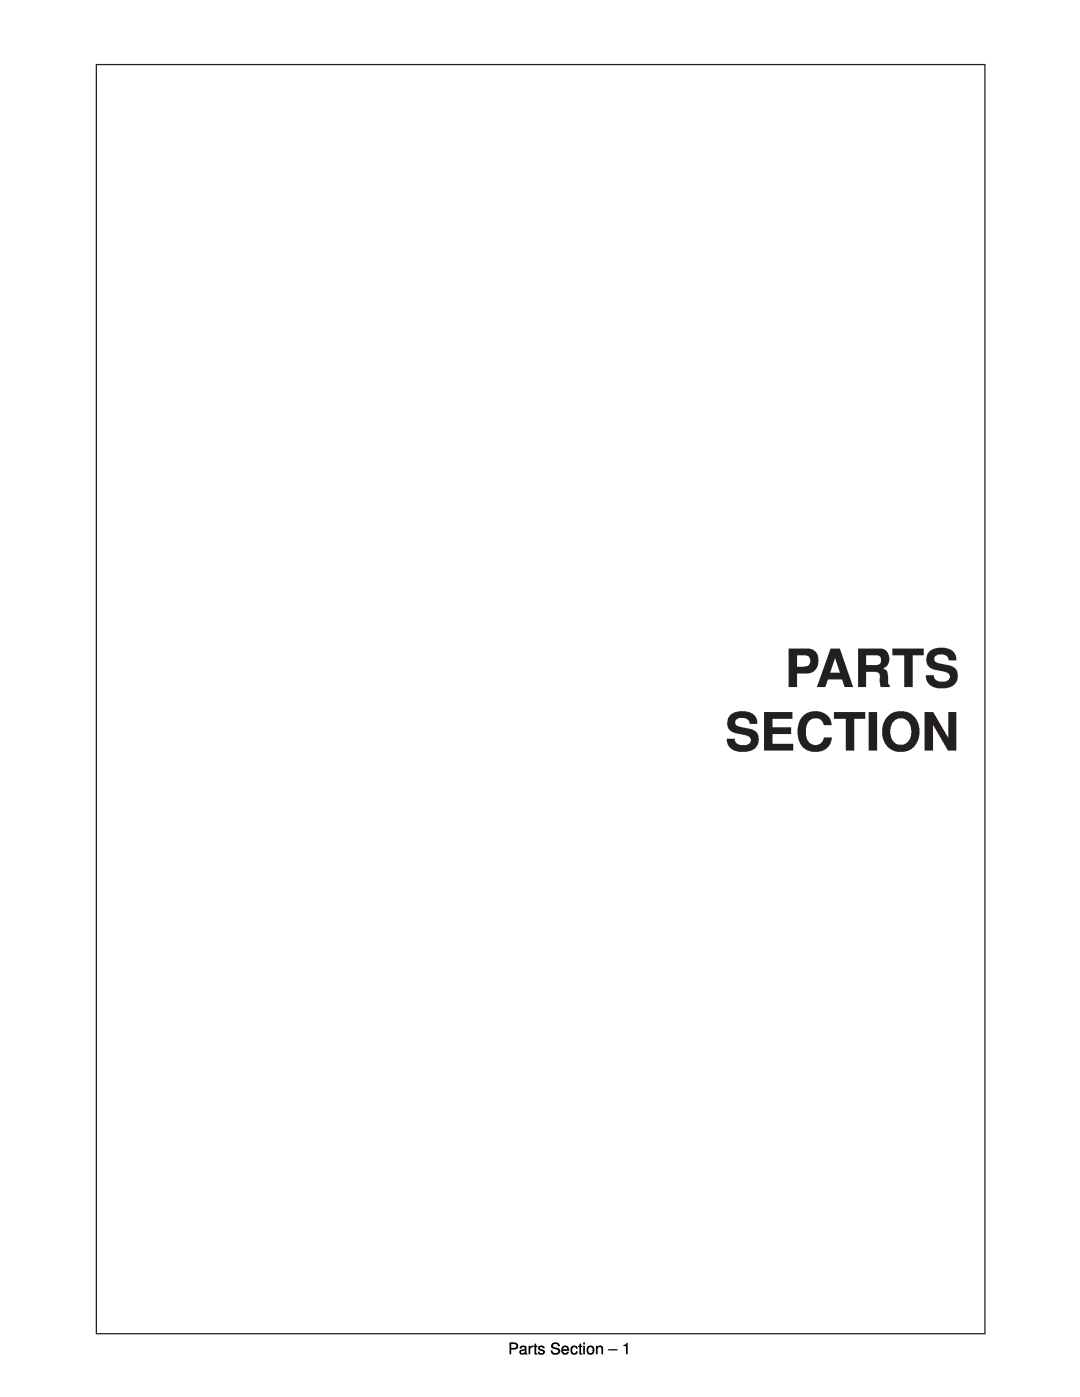 Alamo FC-P-0002 manual Parts Section 